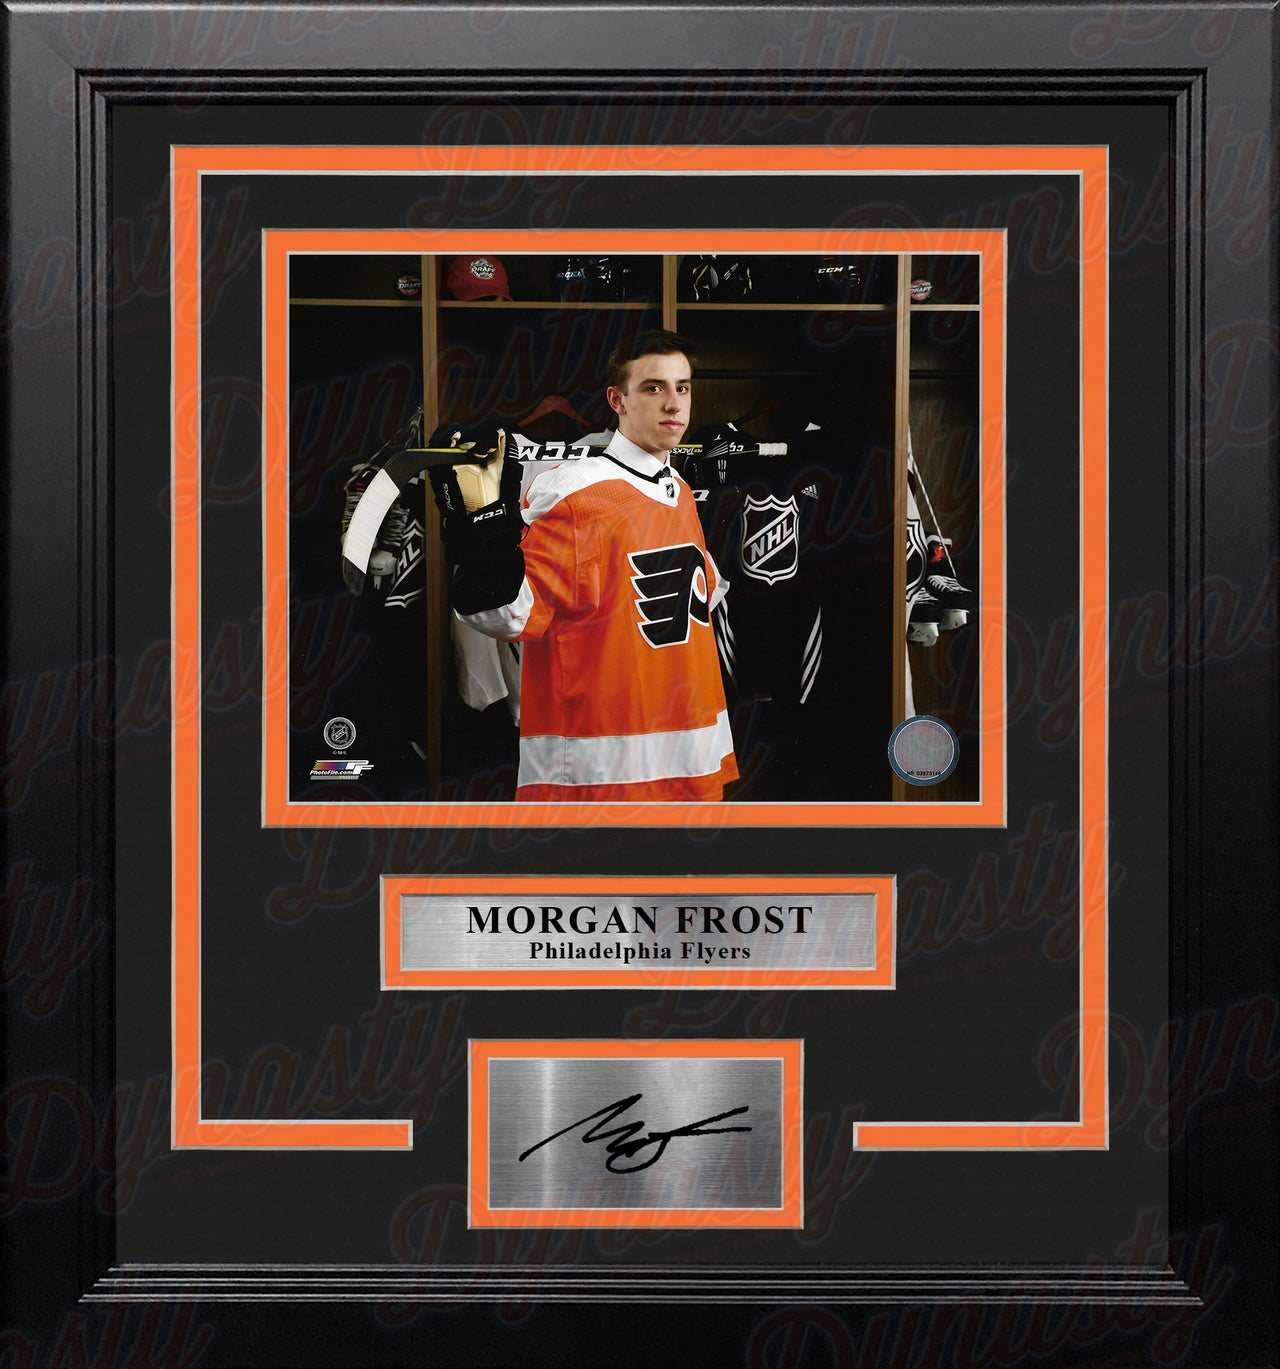 Morgan Frost Locker Room Philadelphia Flyers 8" x 10" Framed Hockey Photo with Engraved Autograph - Dynasty Sports & Framing 